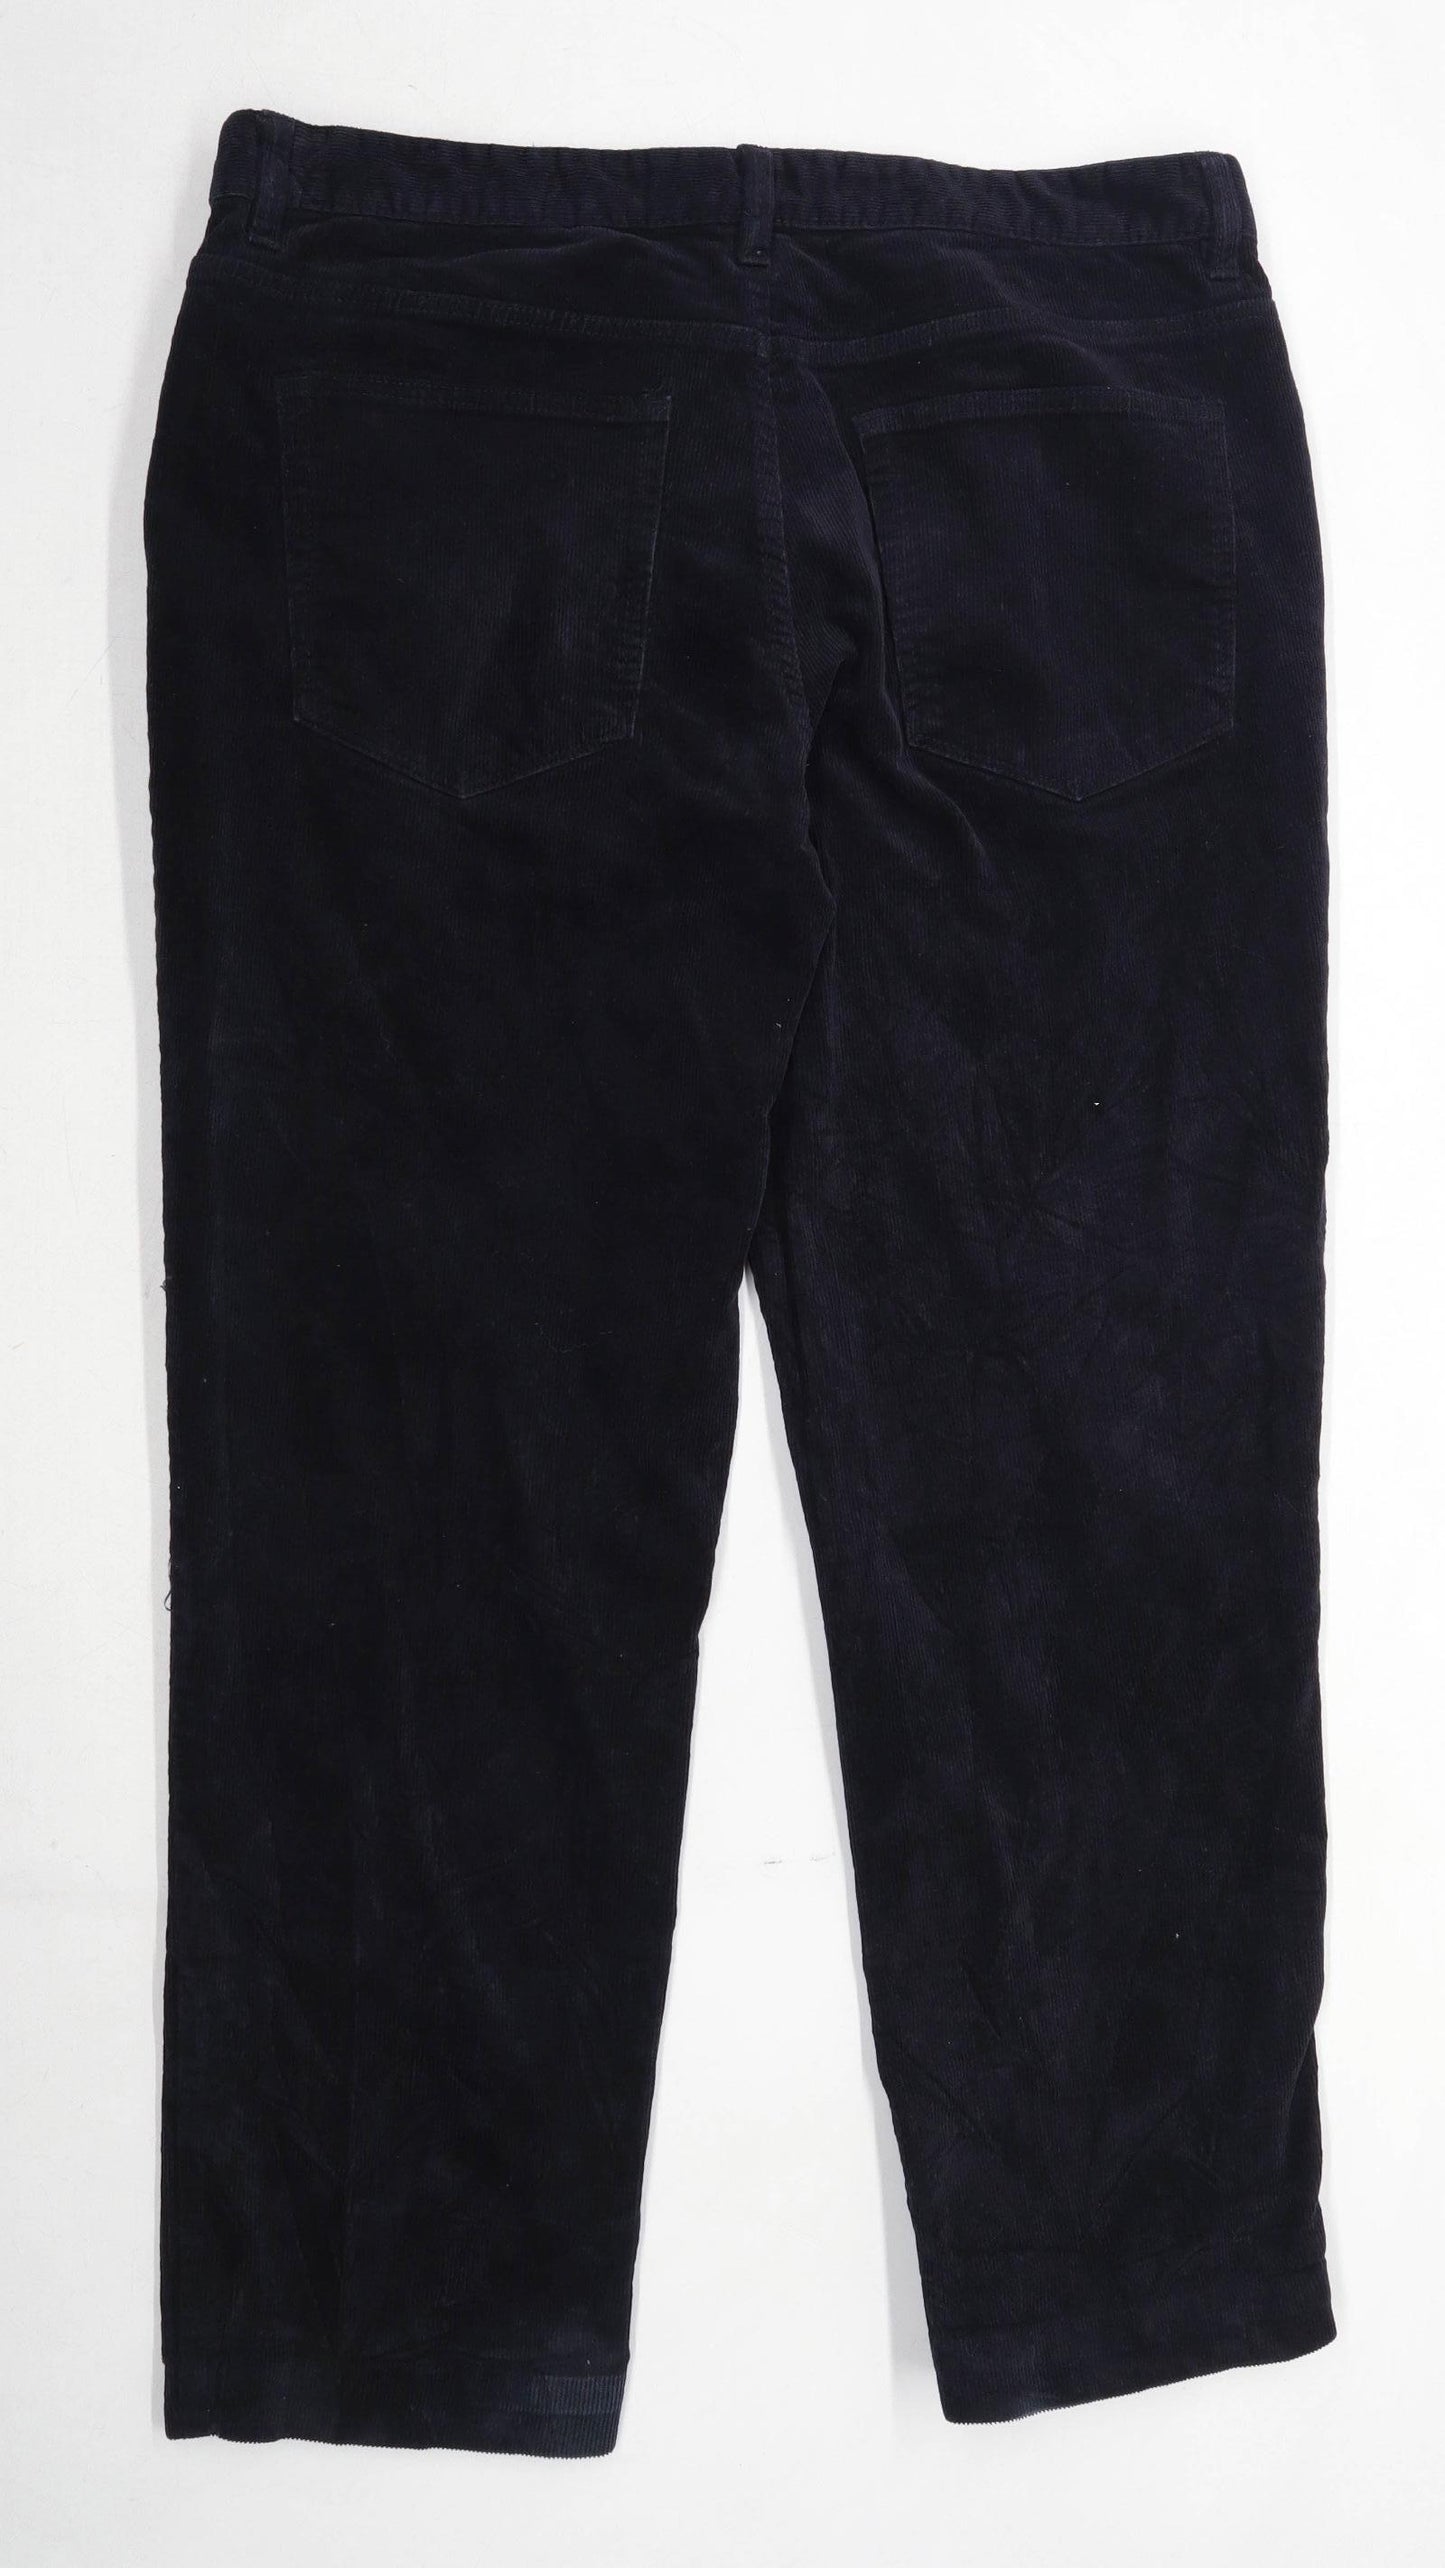 TU Mens Textured Black Corduroy Trousers Size W38/L30